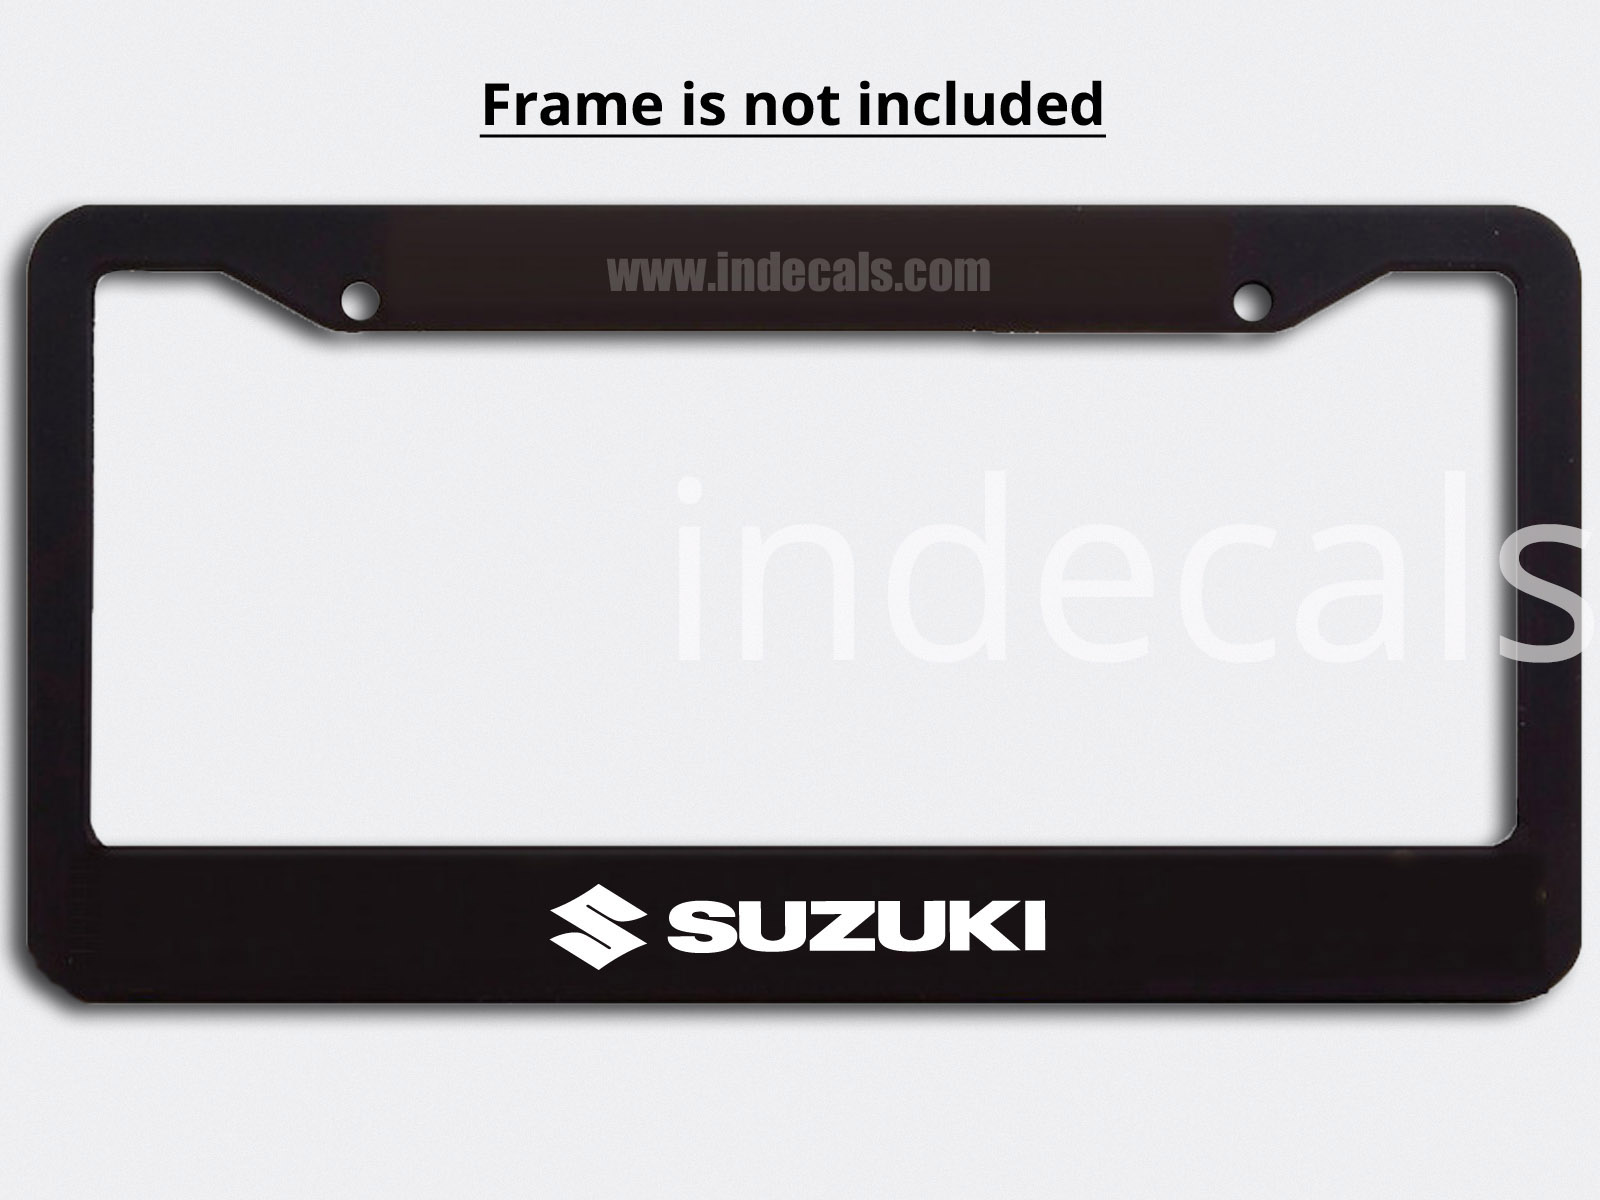 3 x Suzuki Stickers for Plate Frame - White